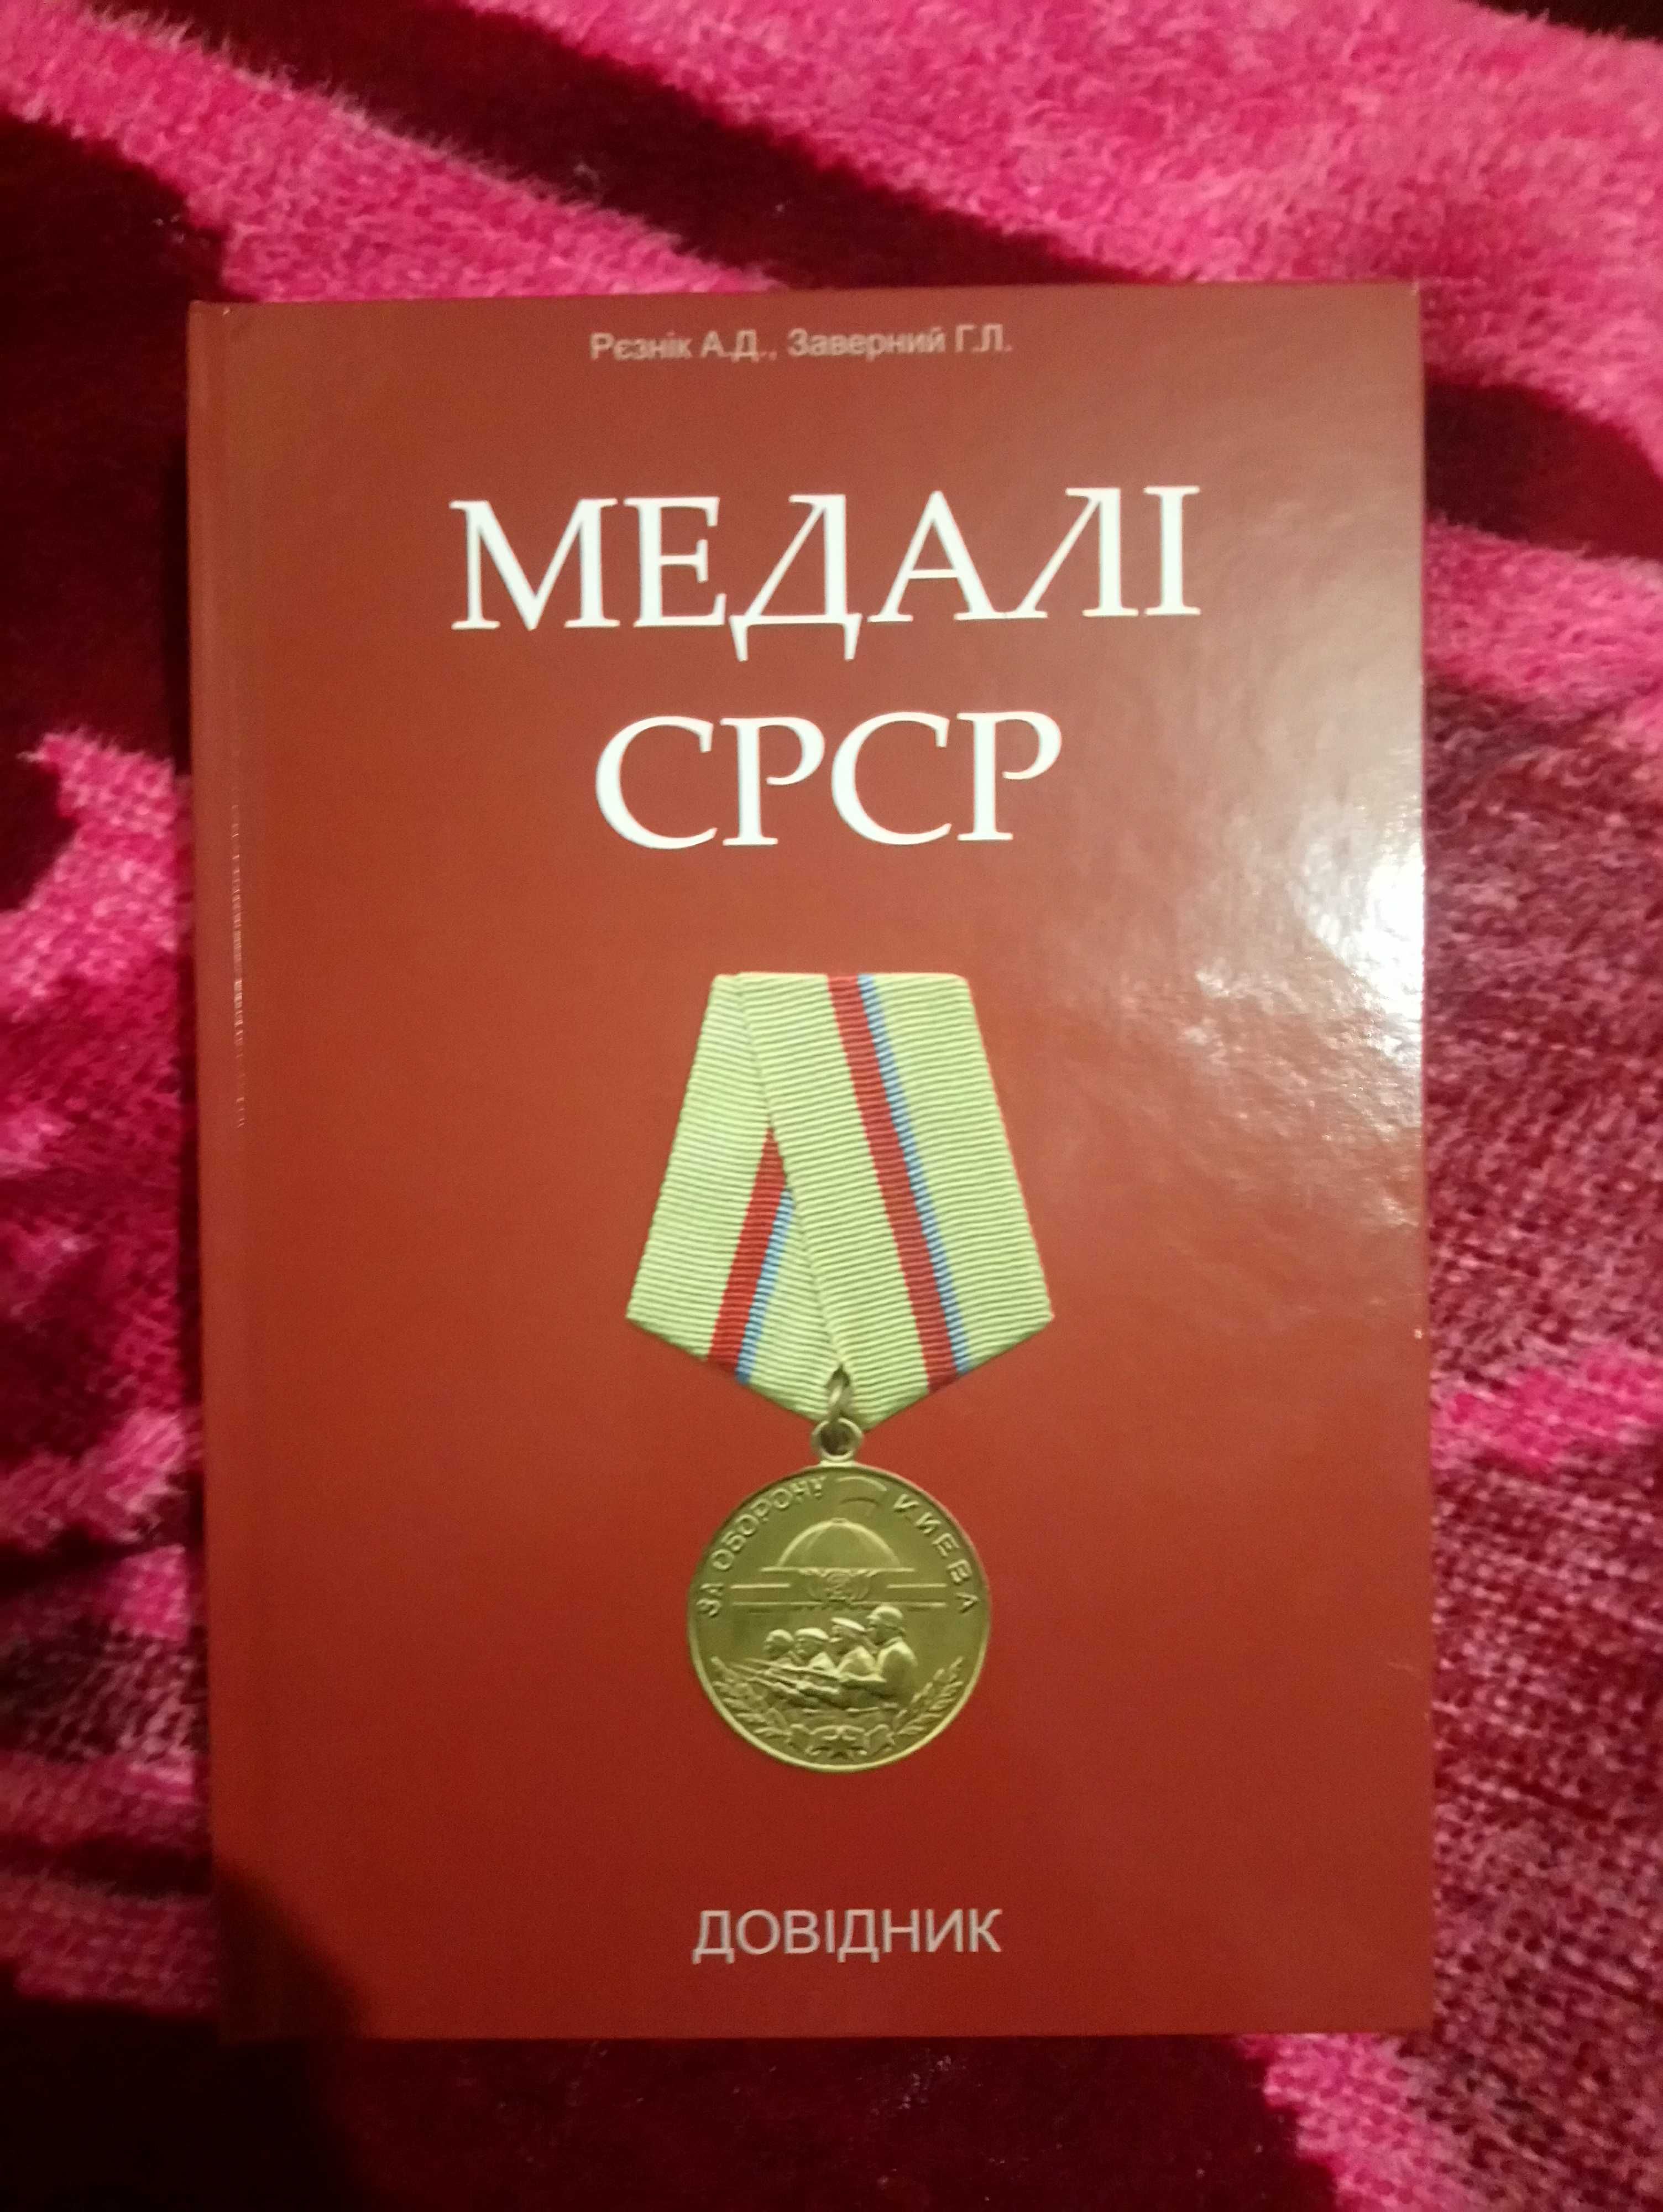 Каталоги и Книги  ордена .медали СССР и другие